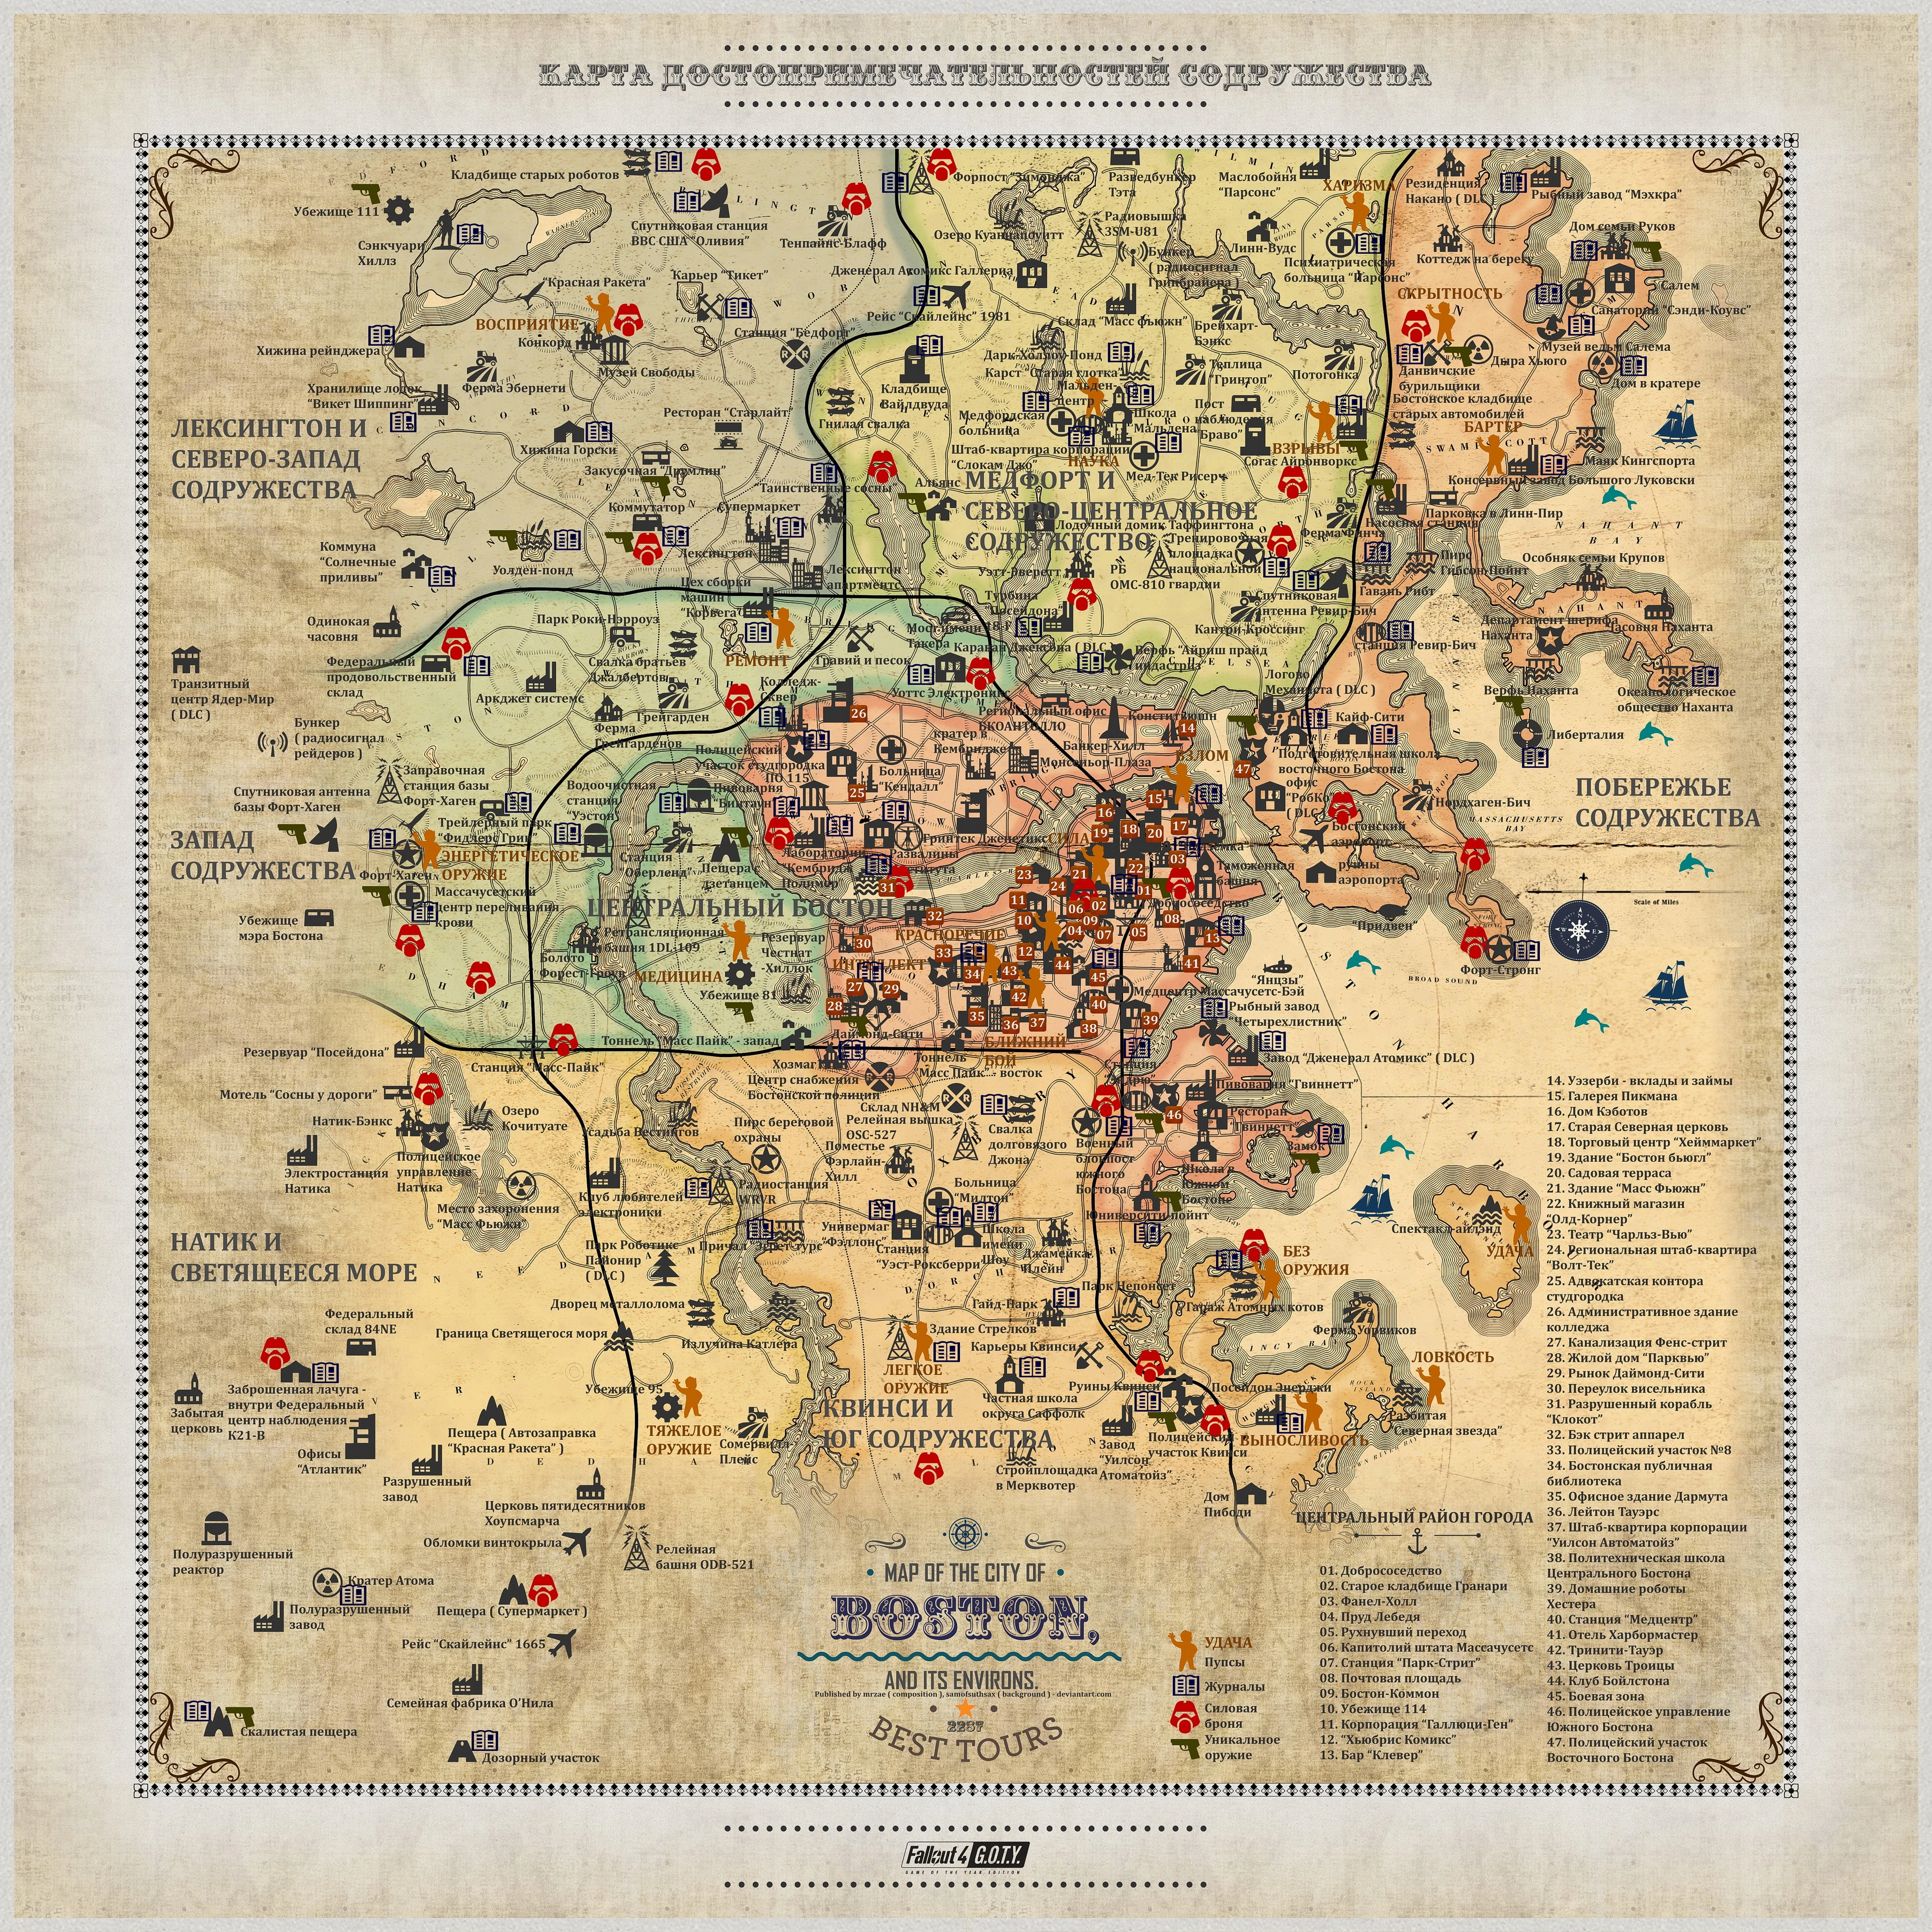 Труженика карта. Fallout 4 карта локаций. Fallout 4 полностью открытая карта. Fallout 4 вся карта локаций. Карта Содружества Fallout 4.